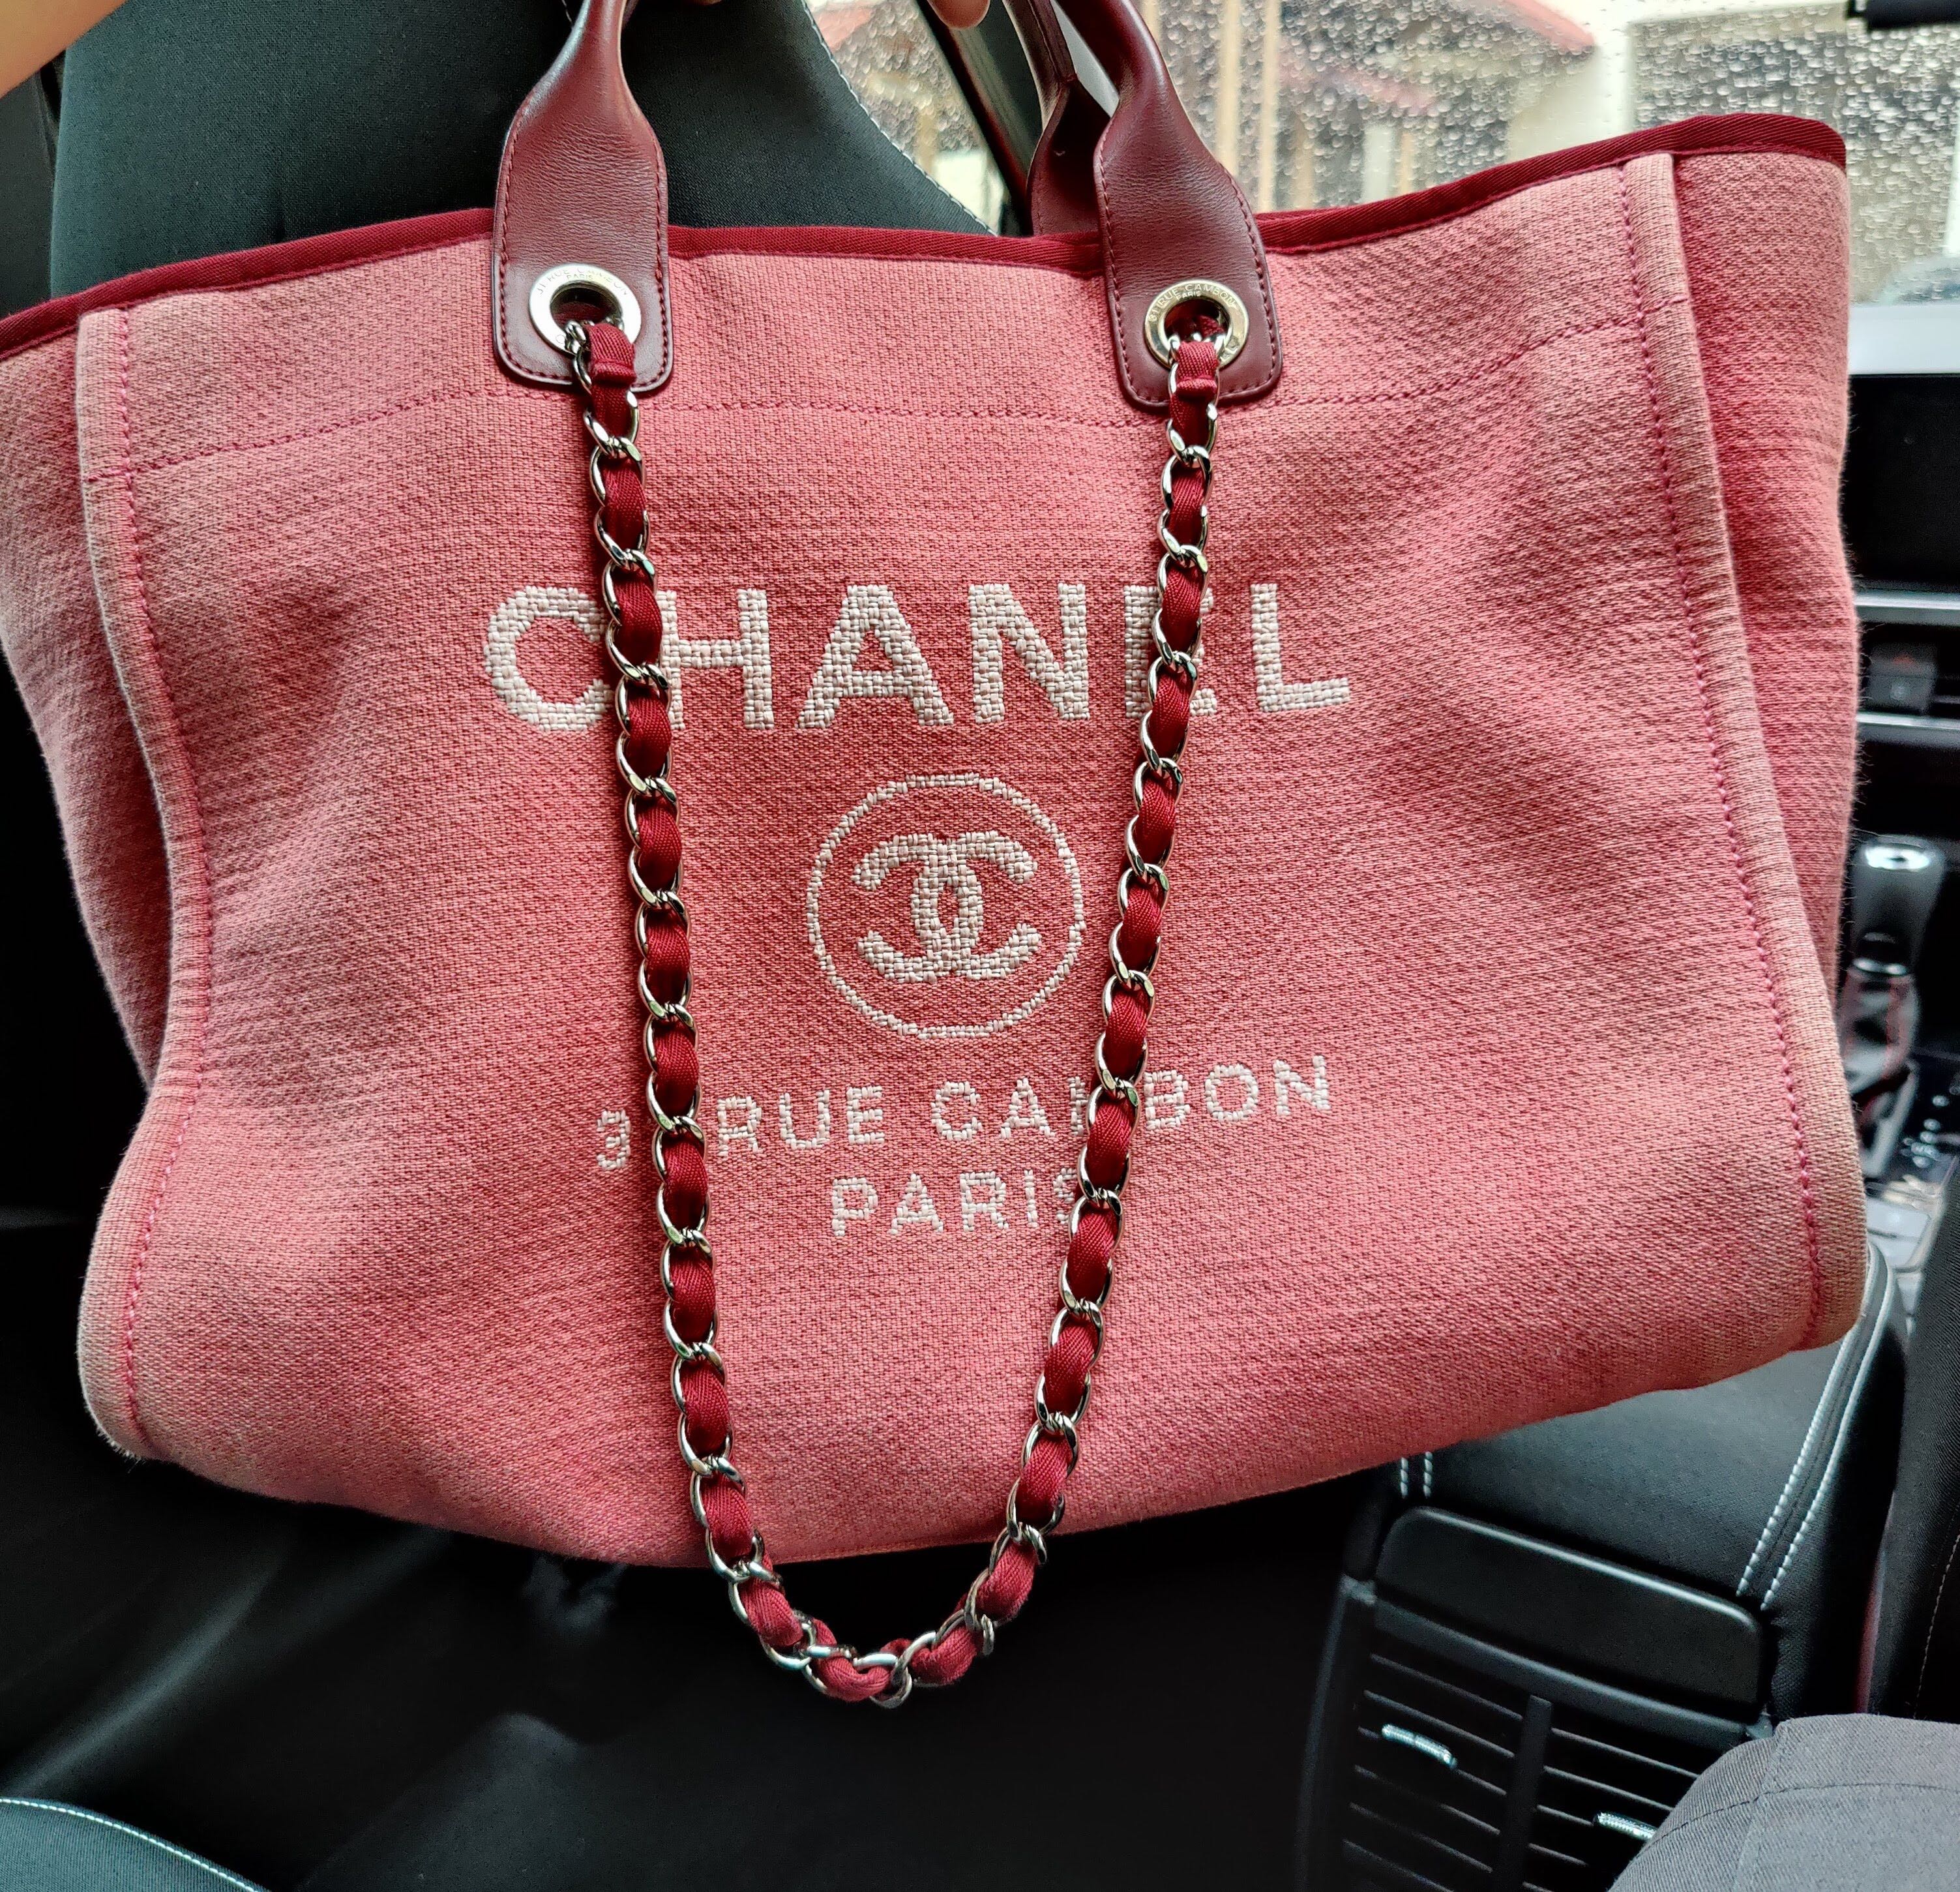 Chanel Deauville Tote PM Bag Pink Orange